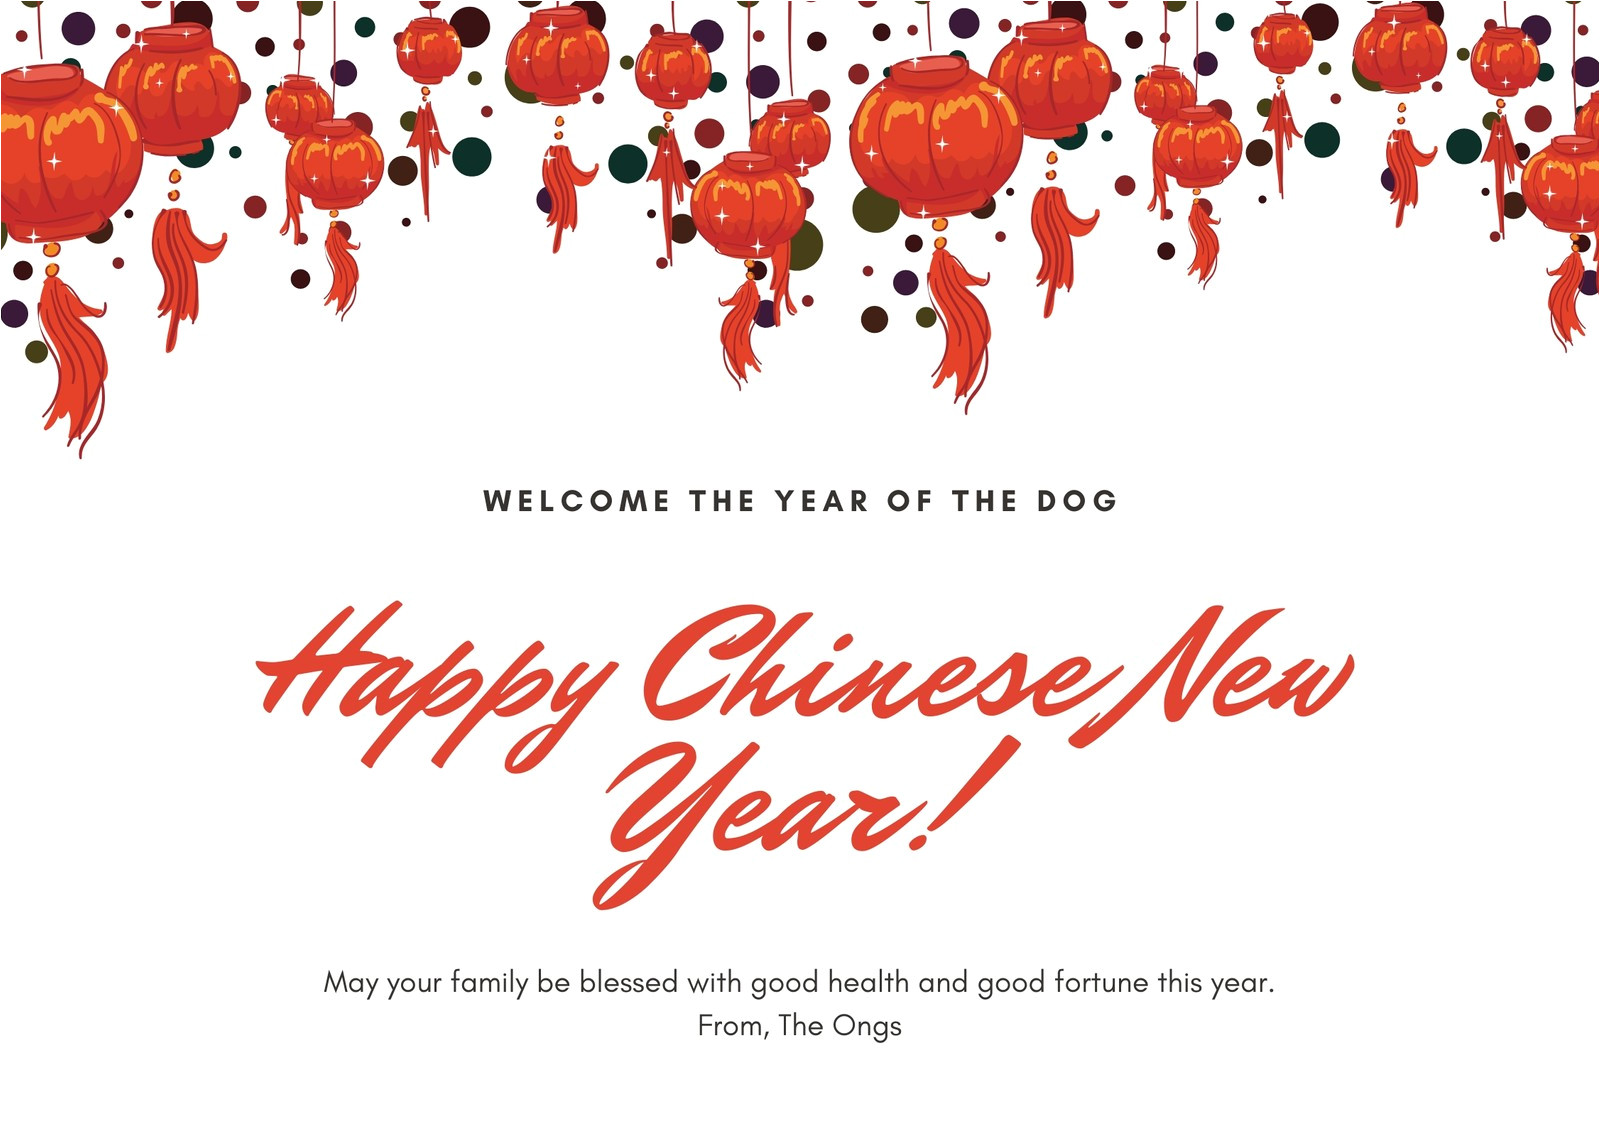 canva white and red lanterns chinese new year card anedsiwvi1e jpg